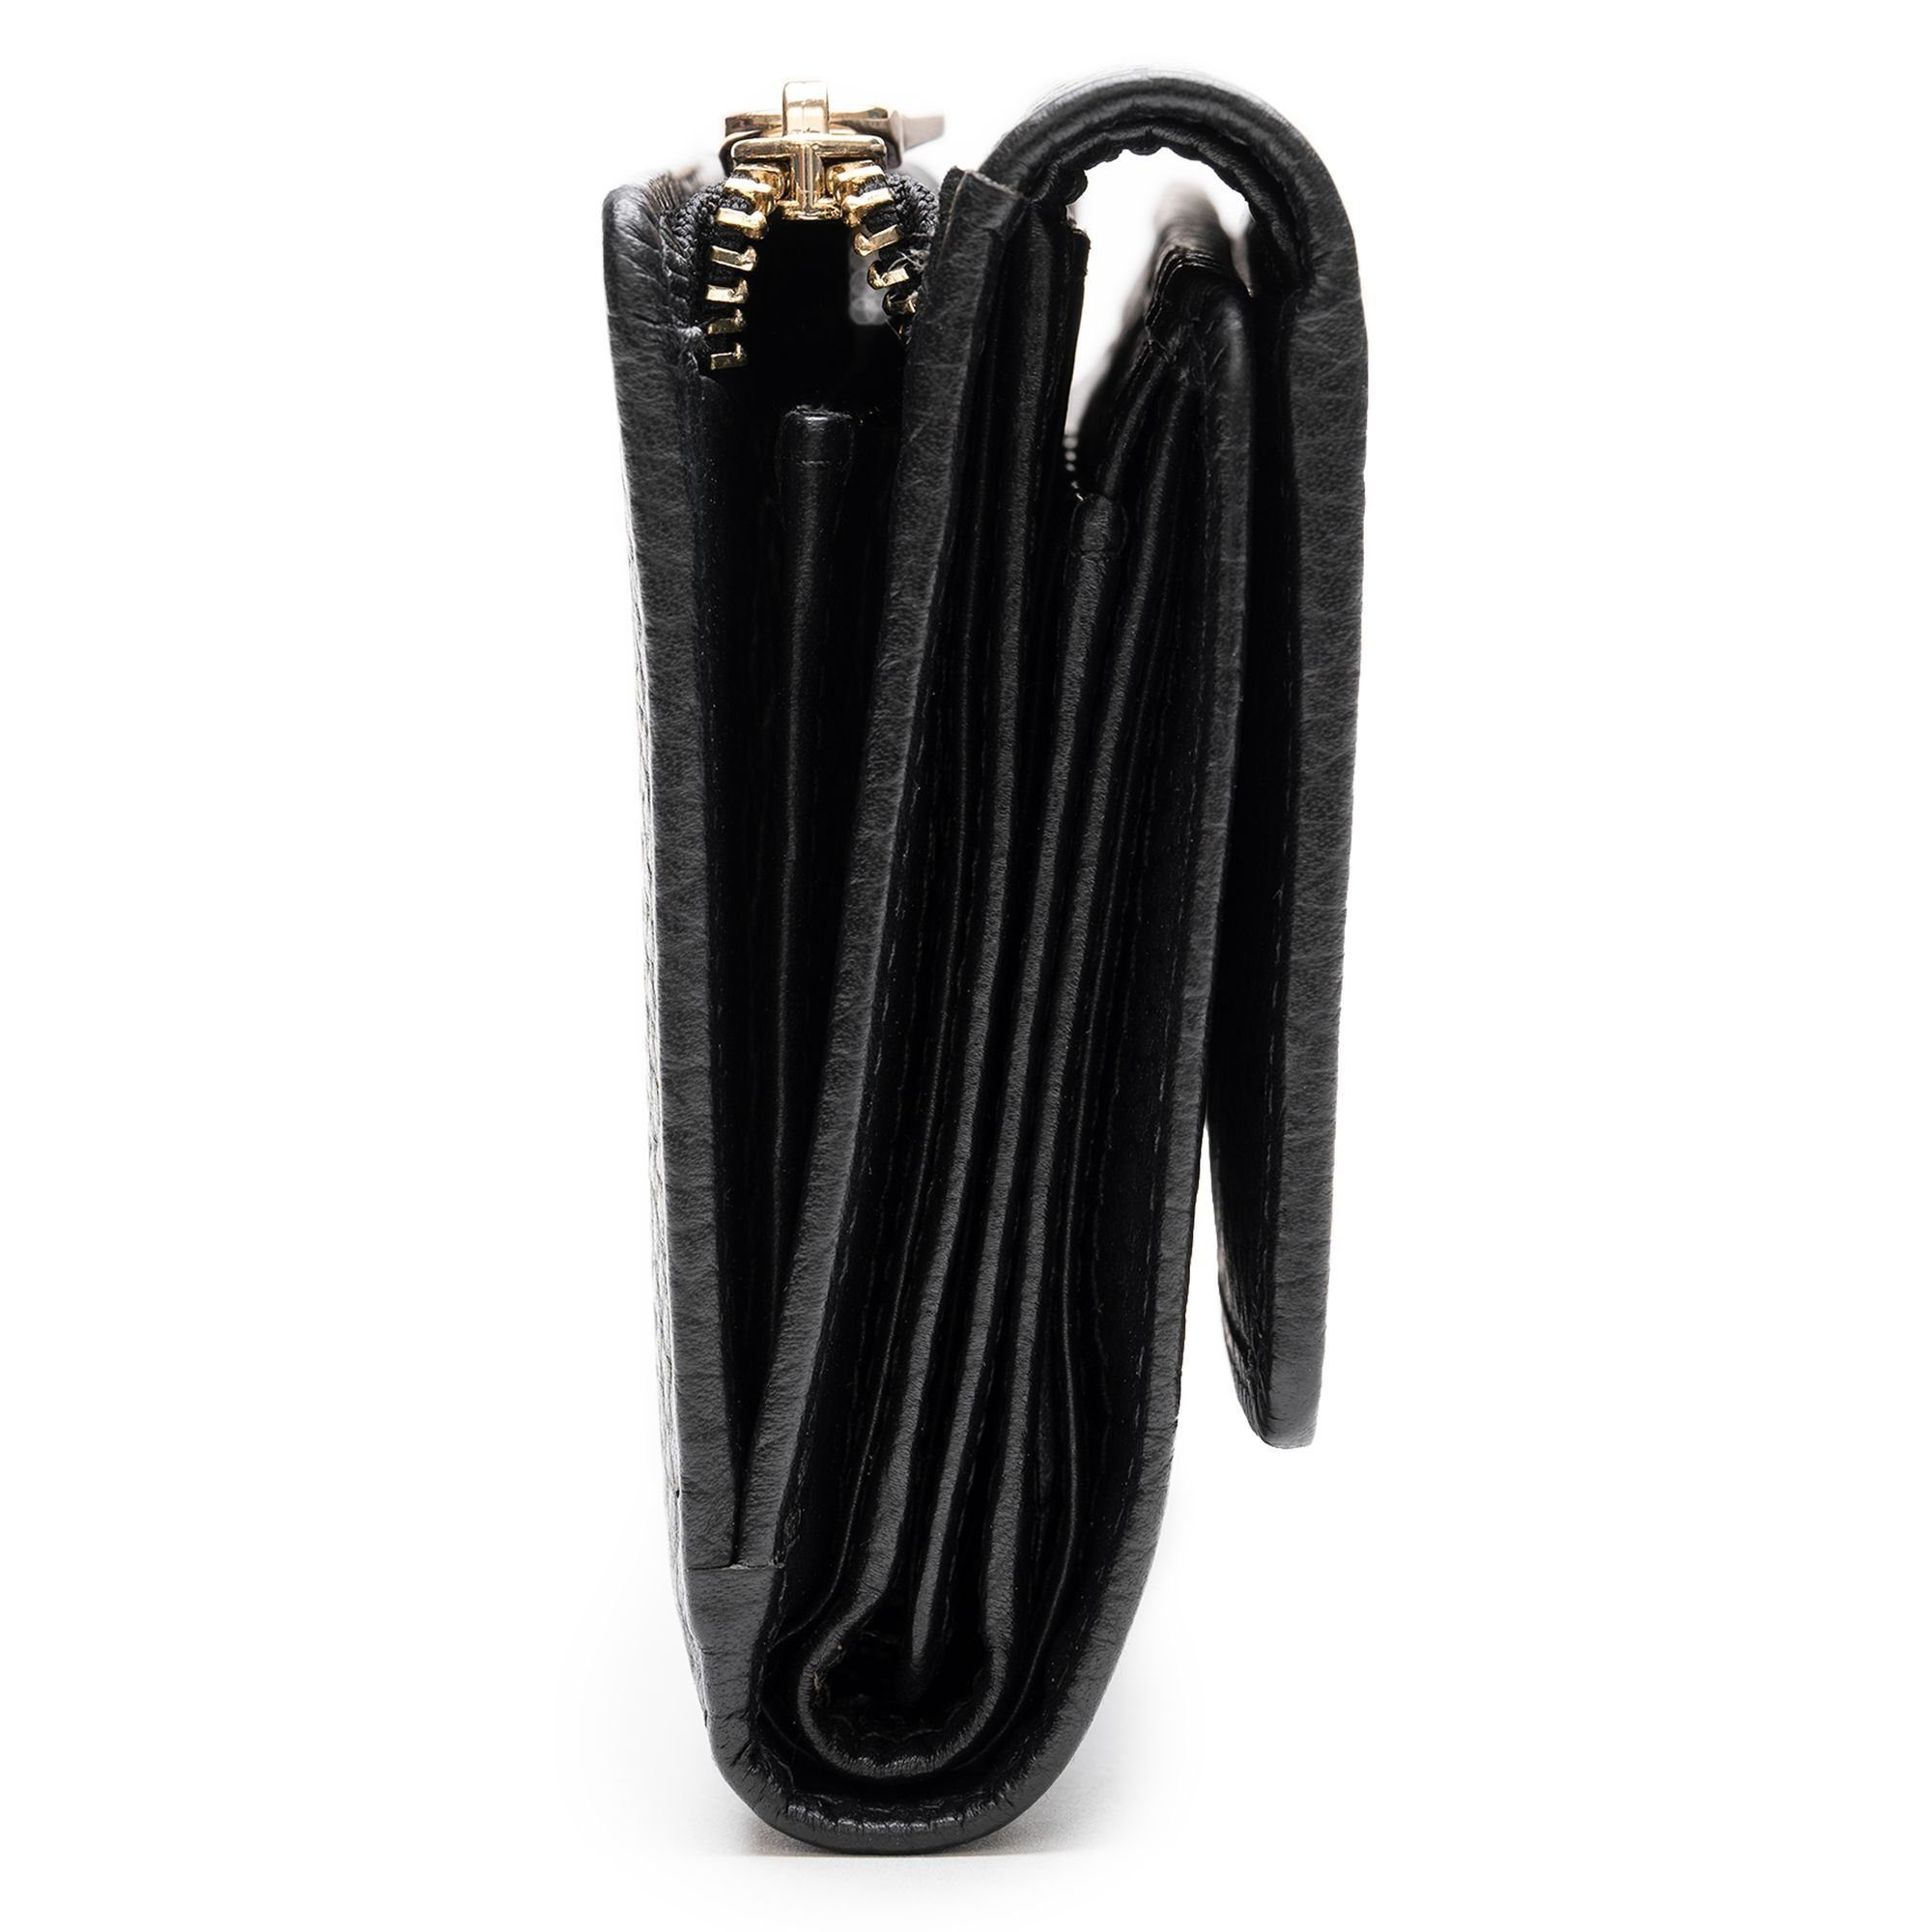 Lazarotti Geldbörse black Bologna Leder Leather